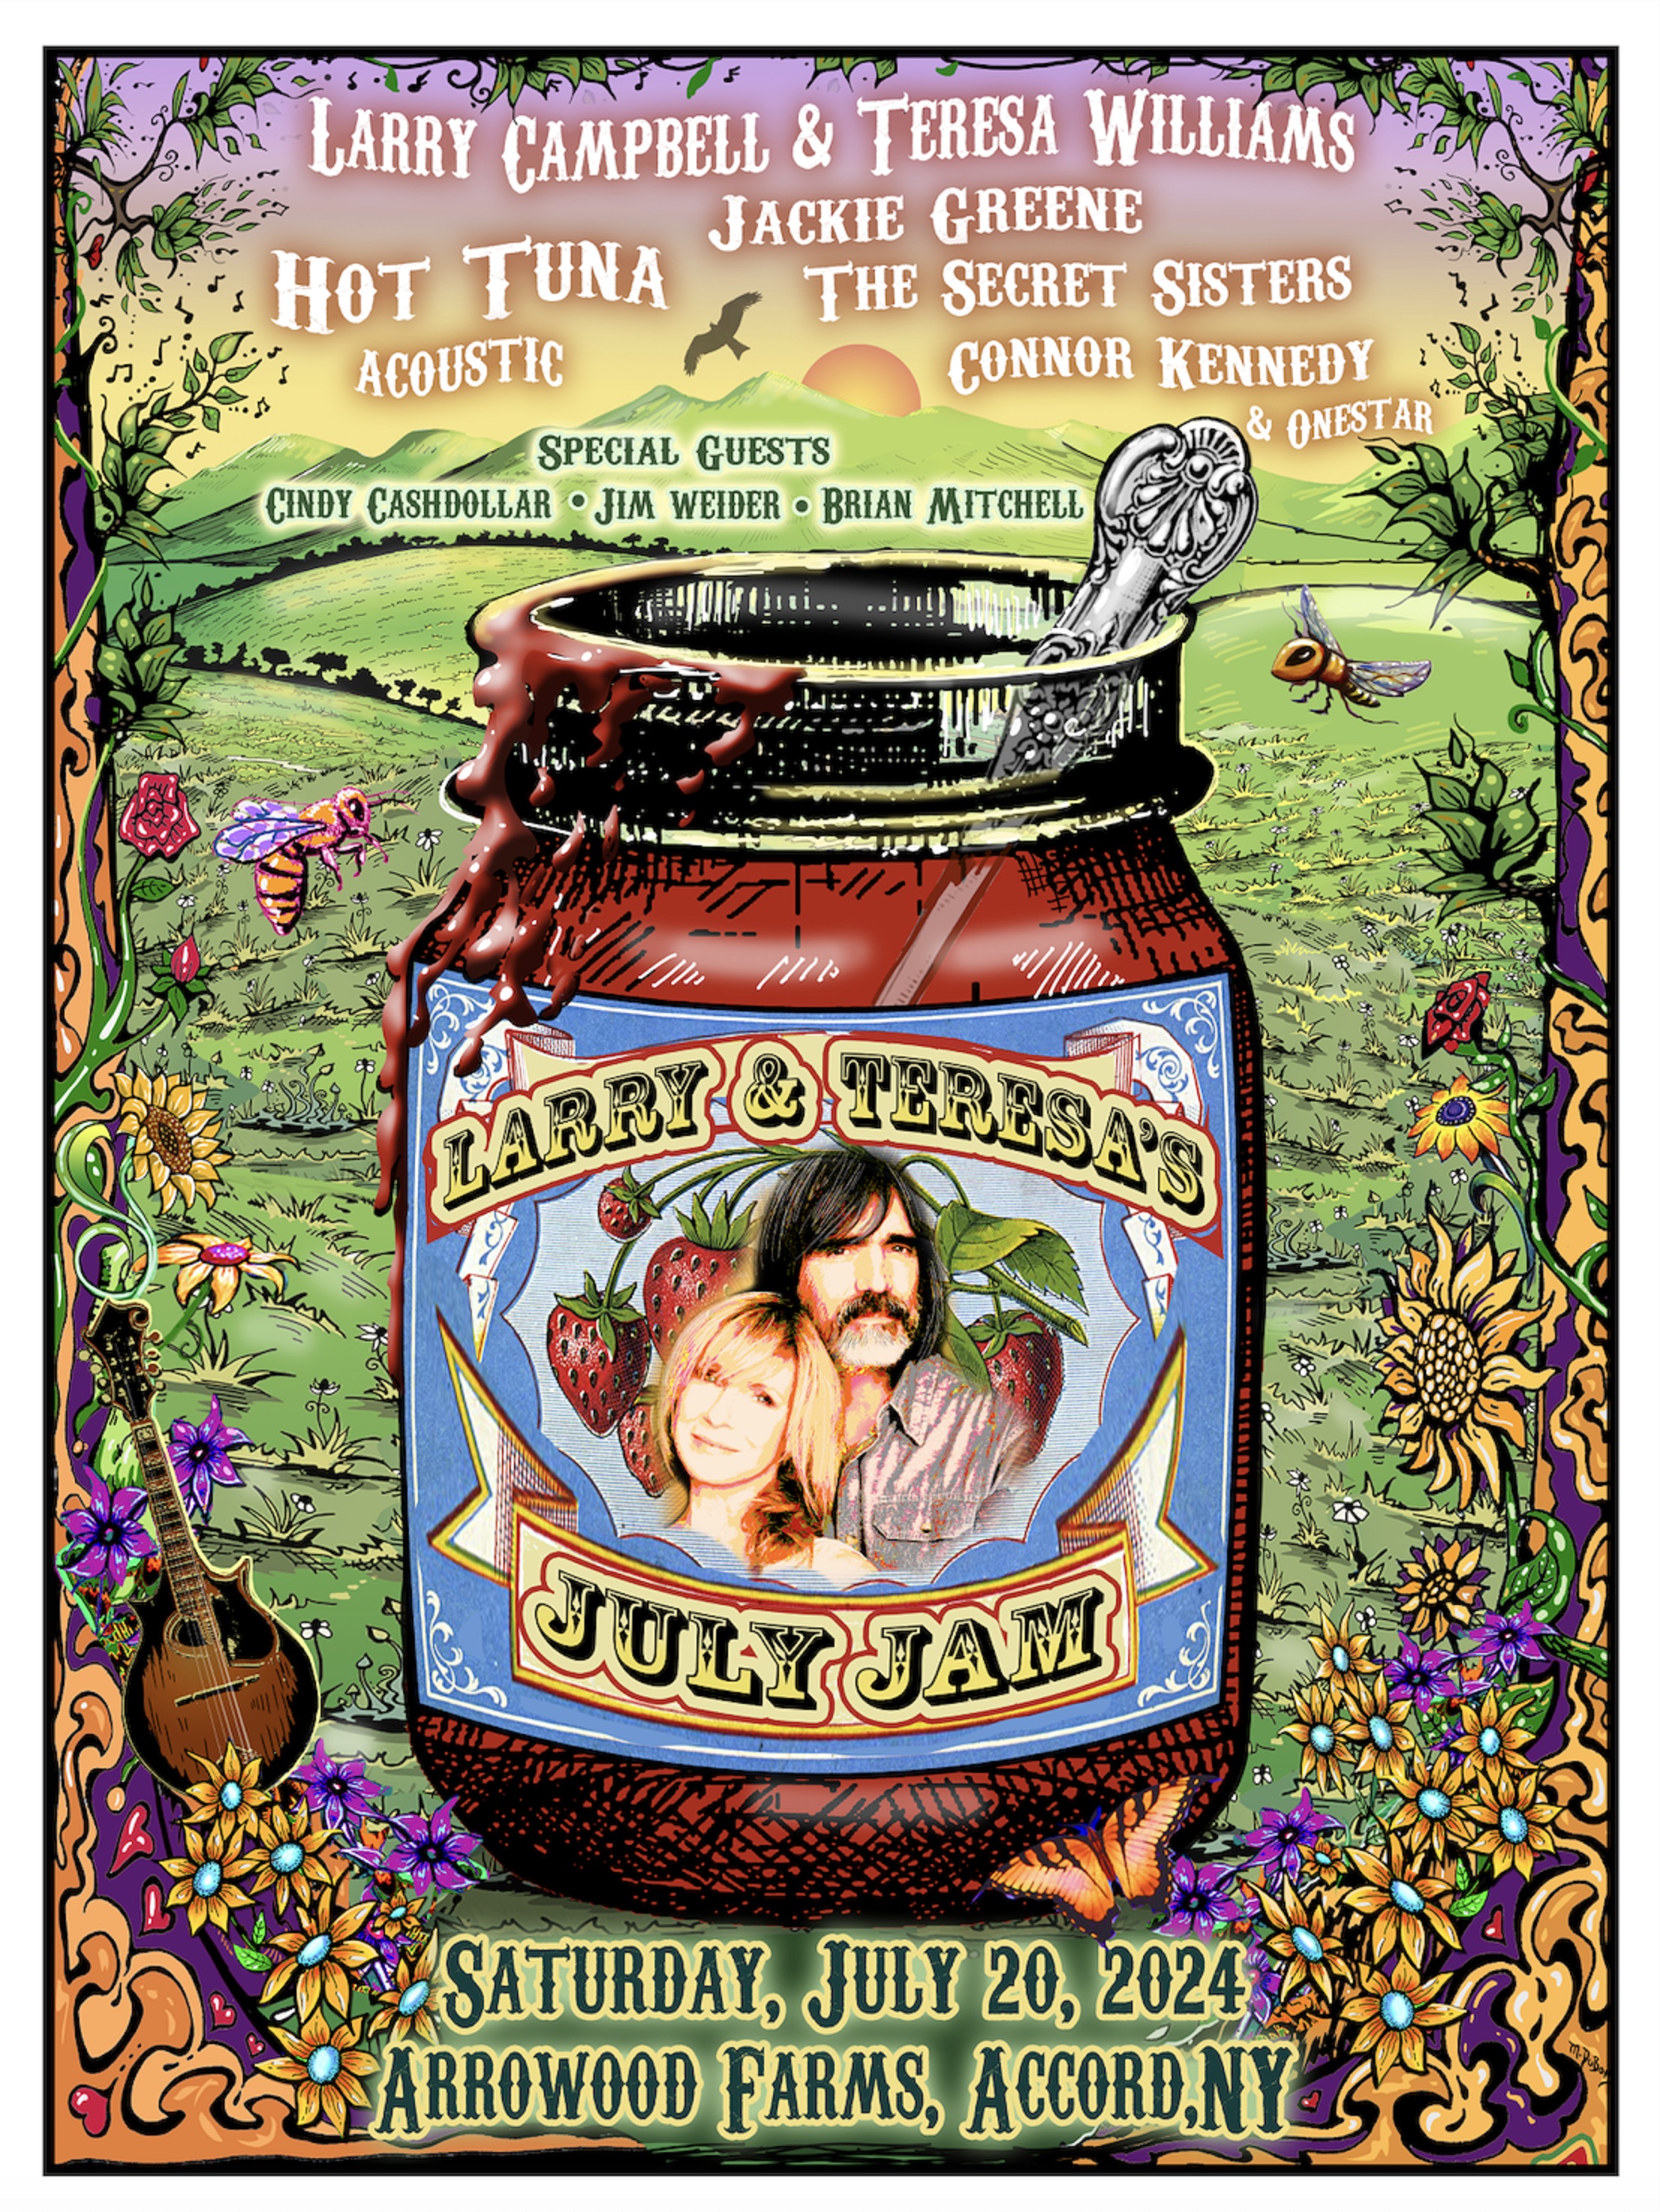 Larry Campbell & Teresa Williams announce inaugural Hudson Valley festival "July Jam"